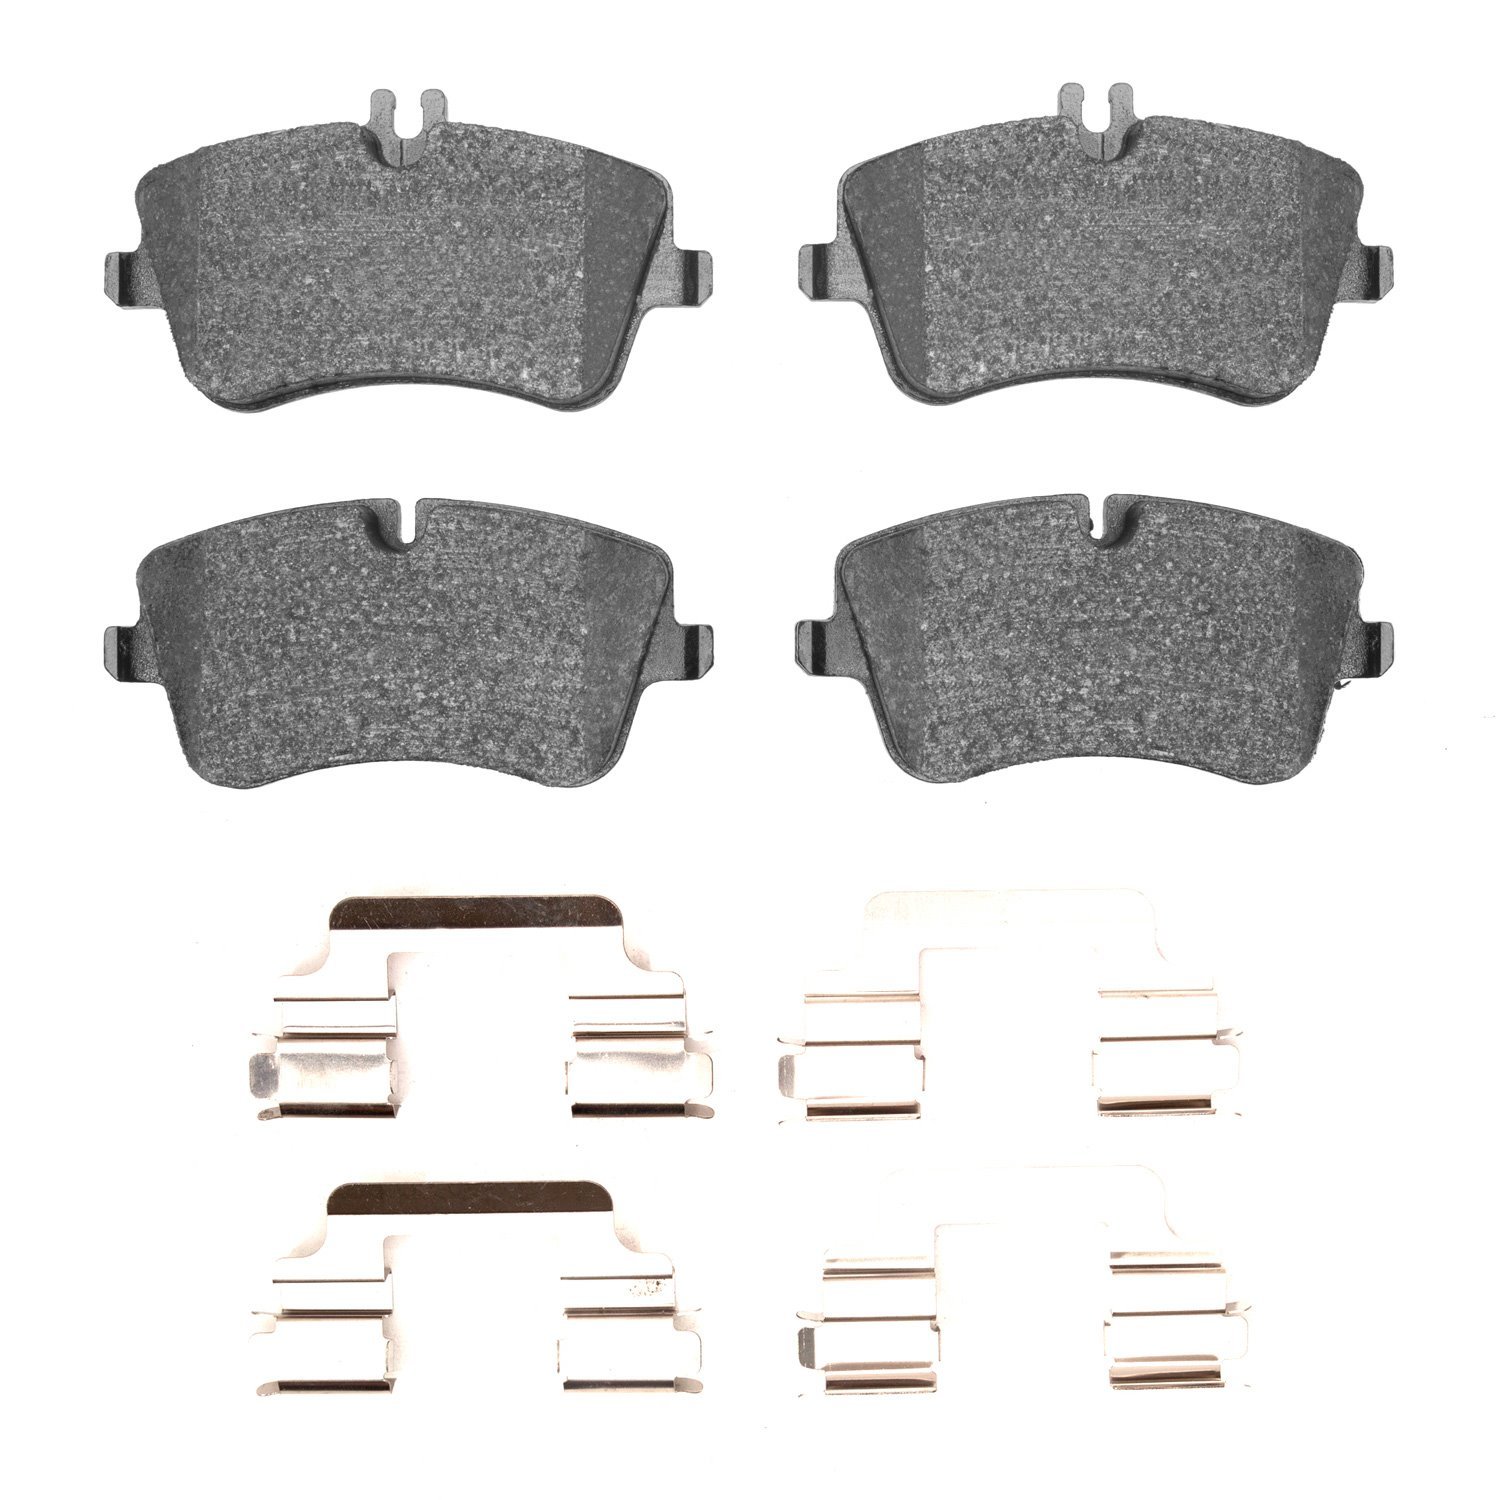 1310-0872-01 3000-Series Ceramic Brake Pads & Hardware Kit, 2001-2005 Mercedes-Benz, Position: Front